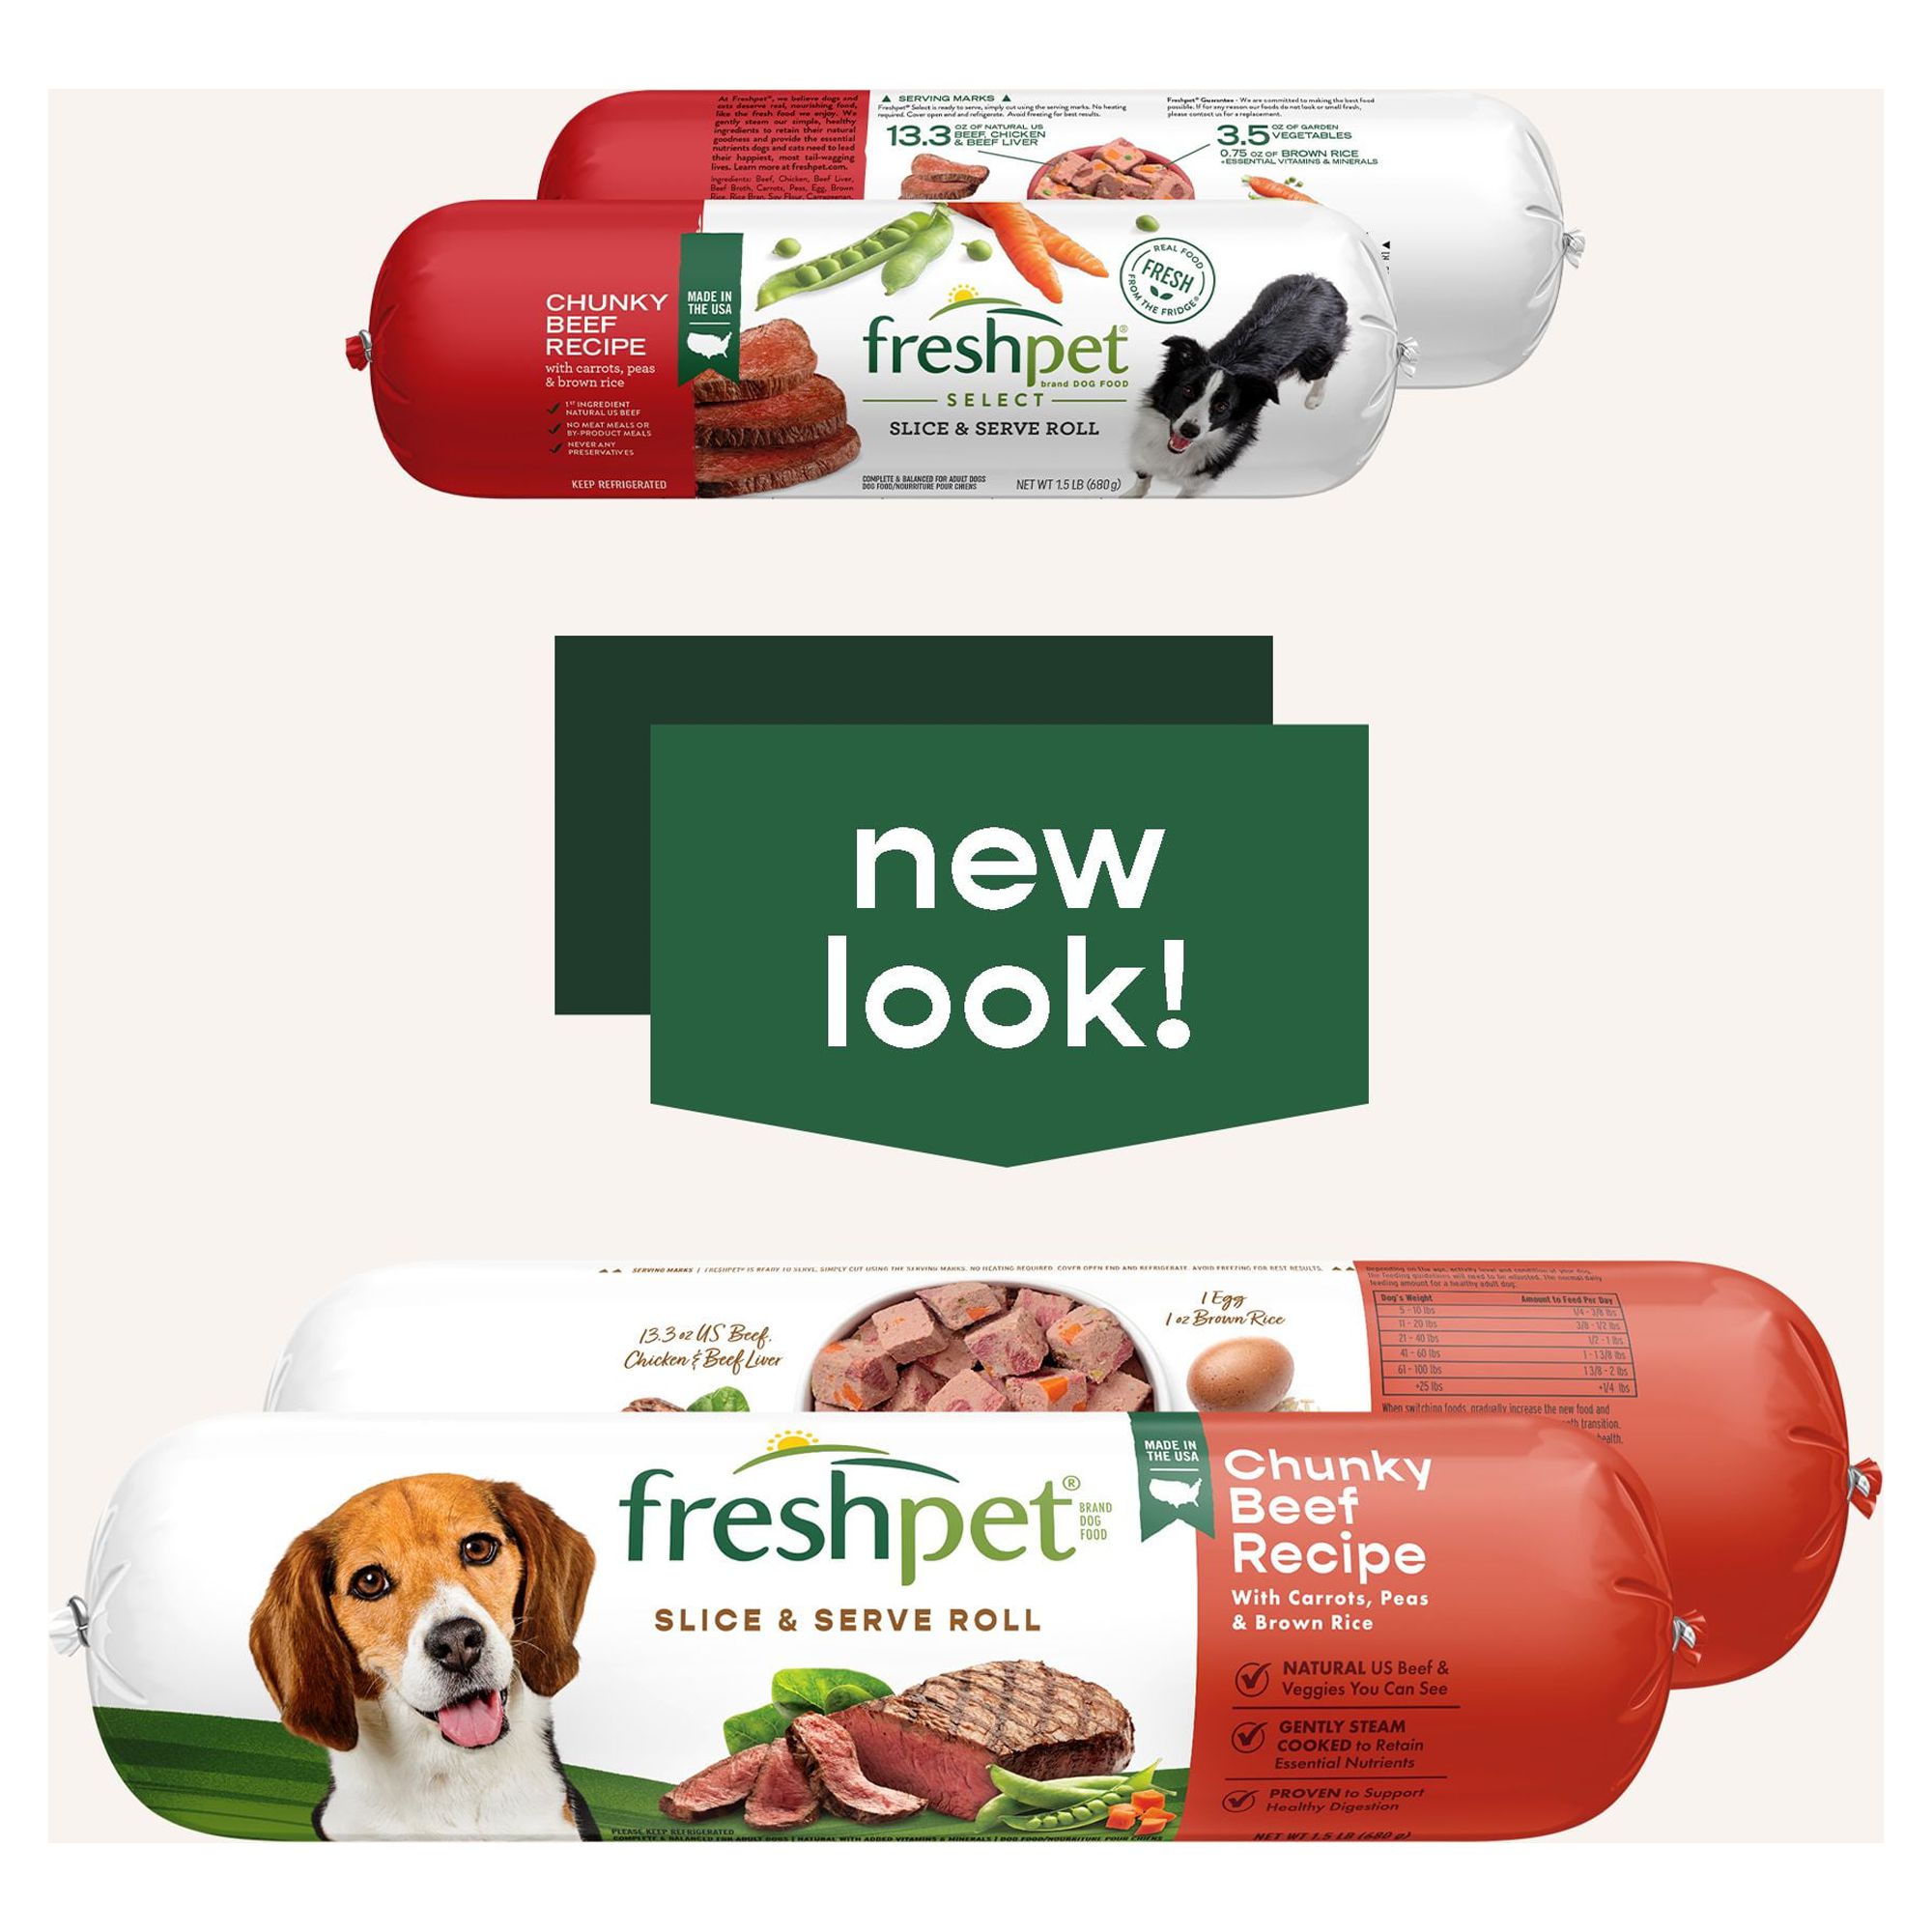 Freshpet Healthy & Natural Dog Food, Fresh Beef Roll, 1.5lb - image 3 of 8